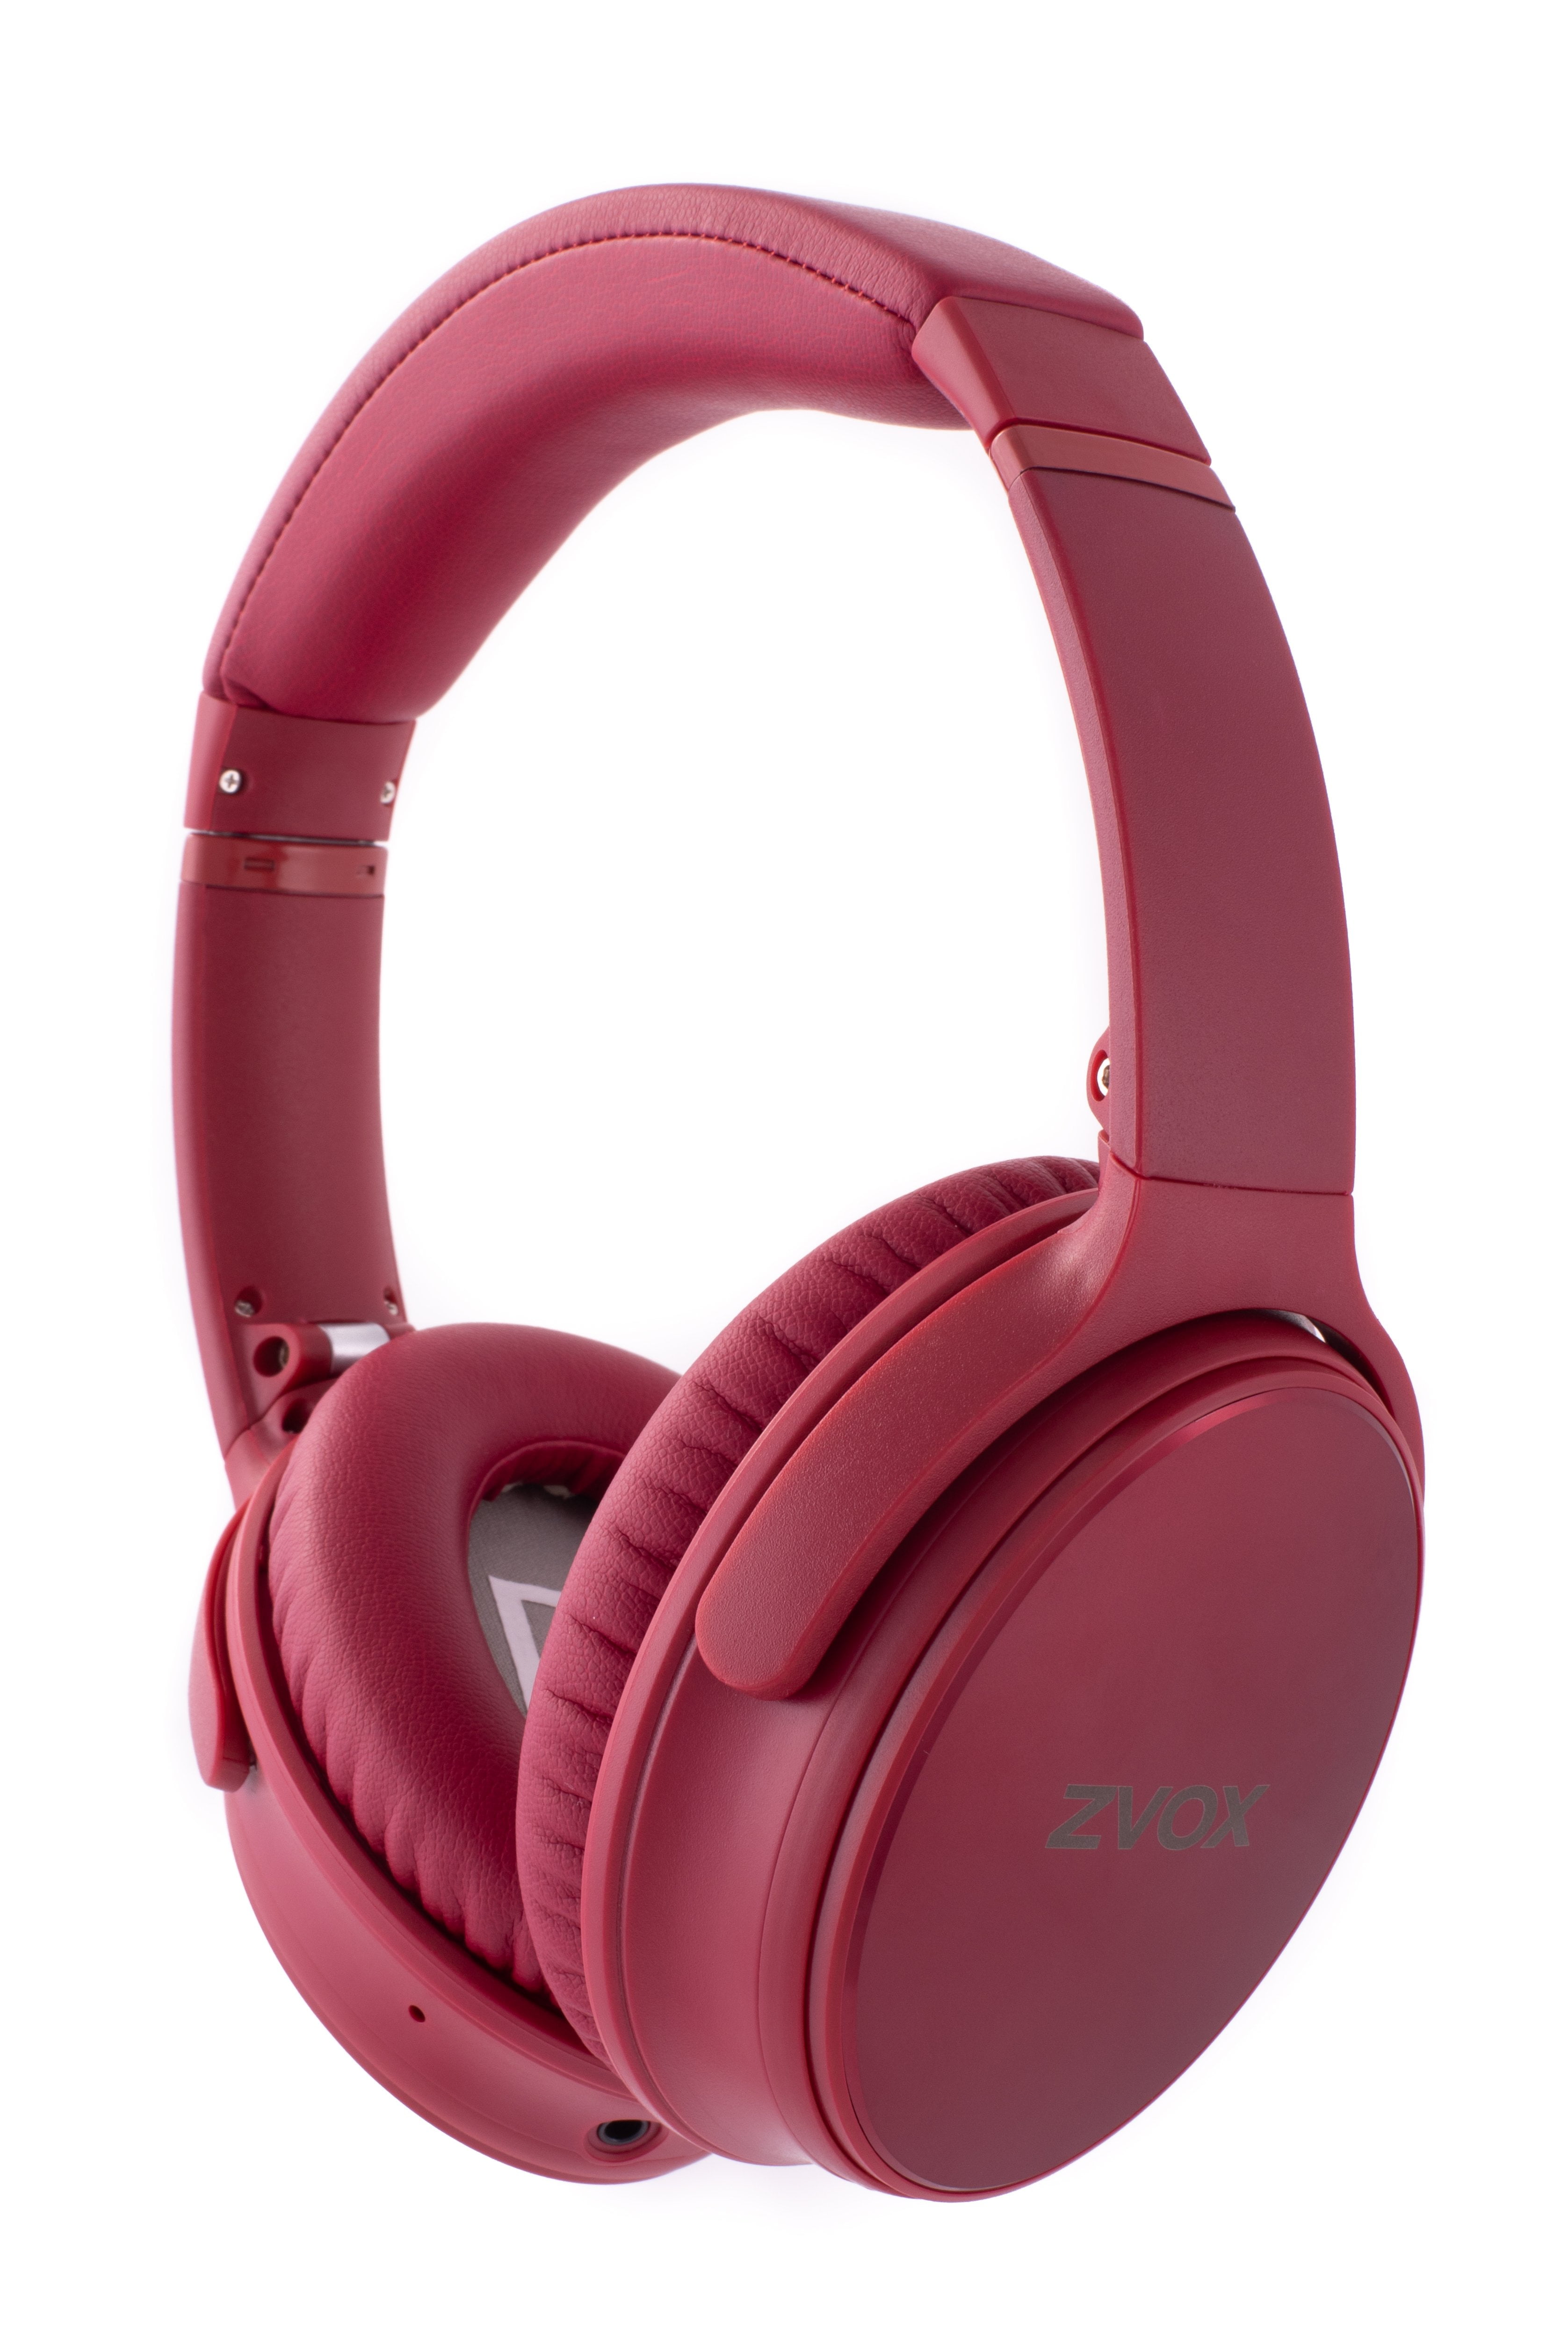 AV52 Bluetooth Noise Cancelling Headphones – ZVOX Audio